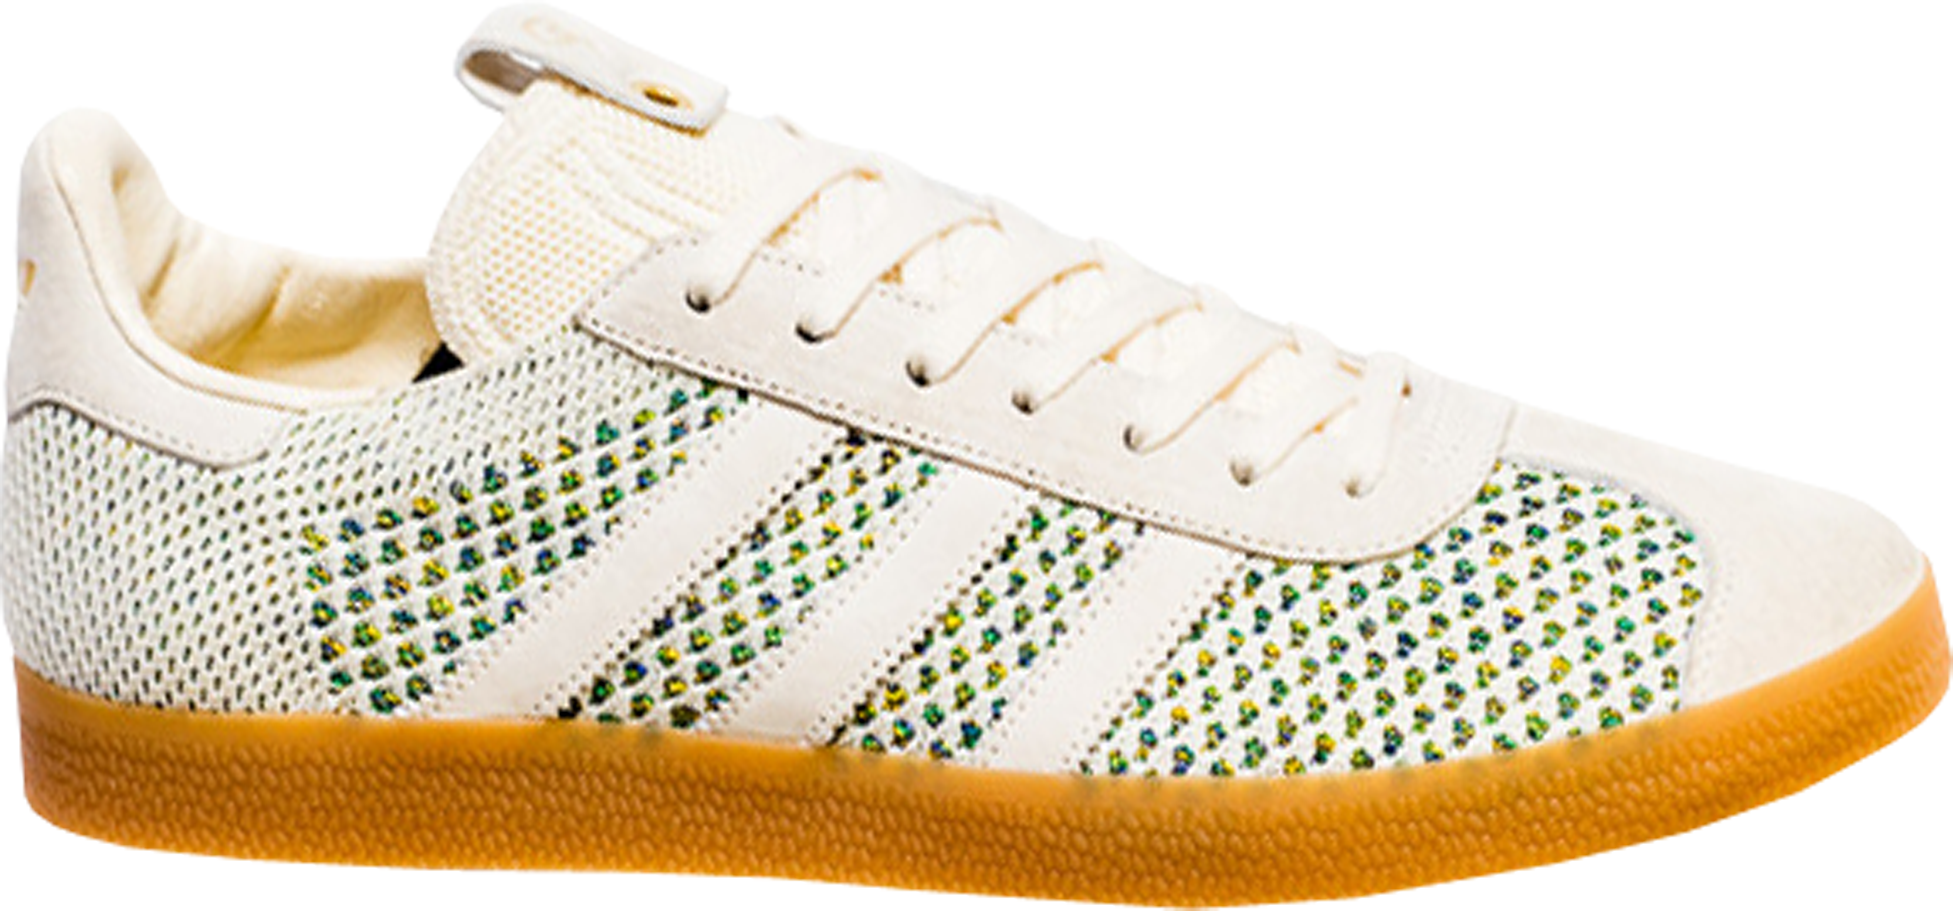 adidas consortium gazelle primeknit x sneaker politics mardi gras